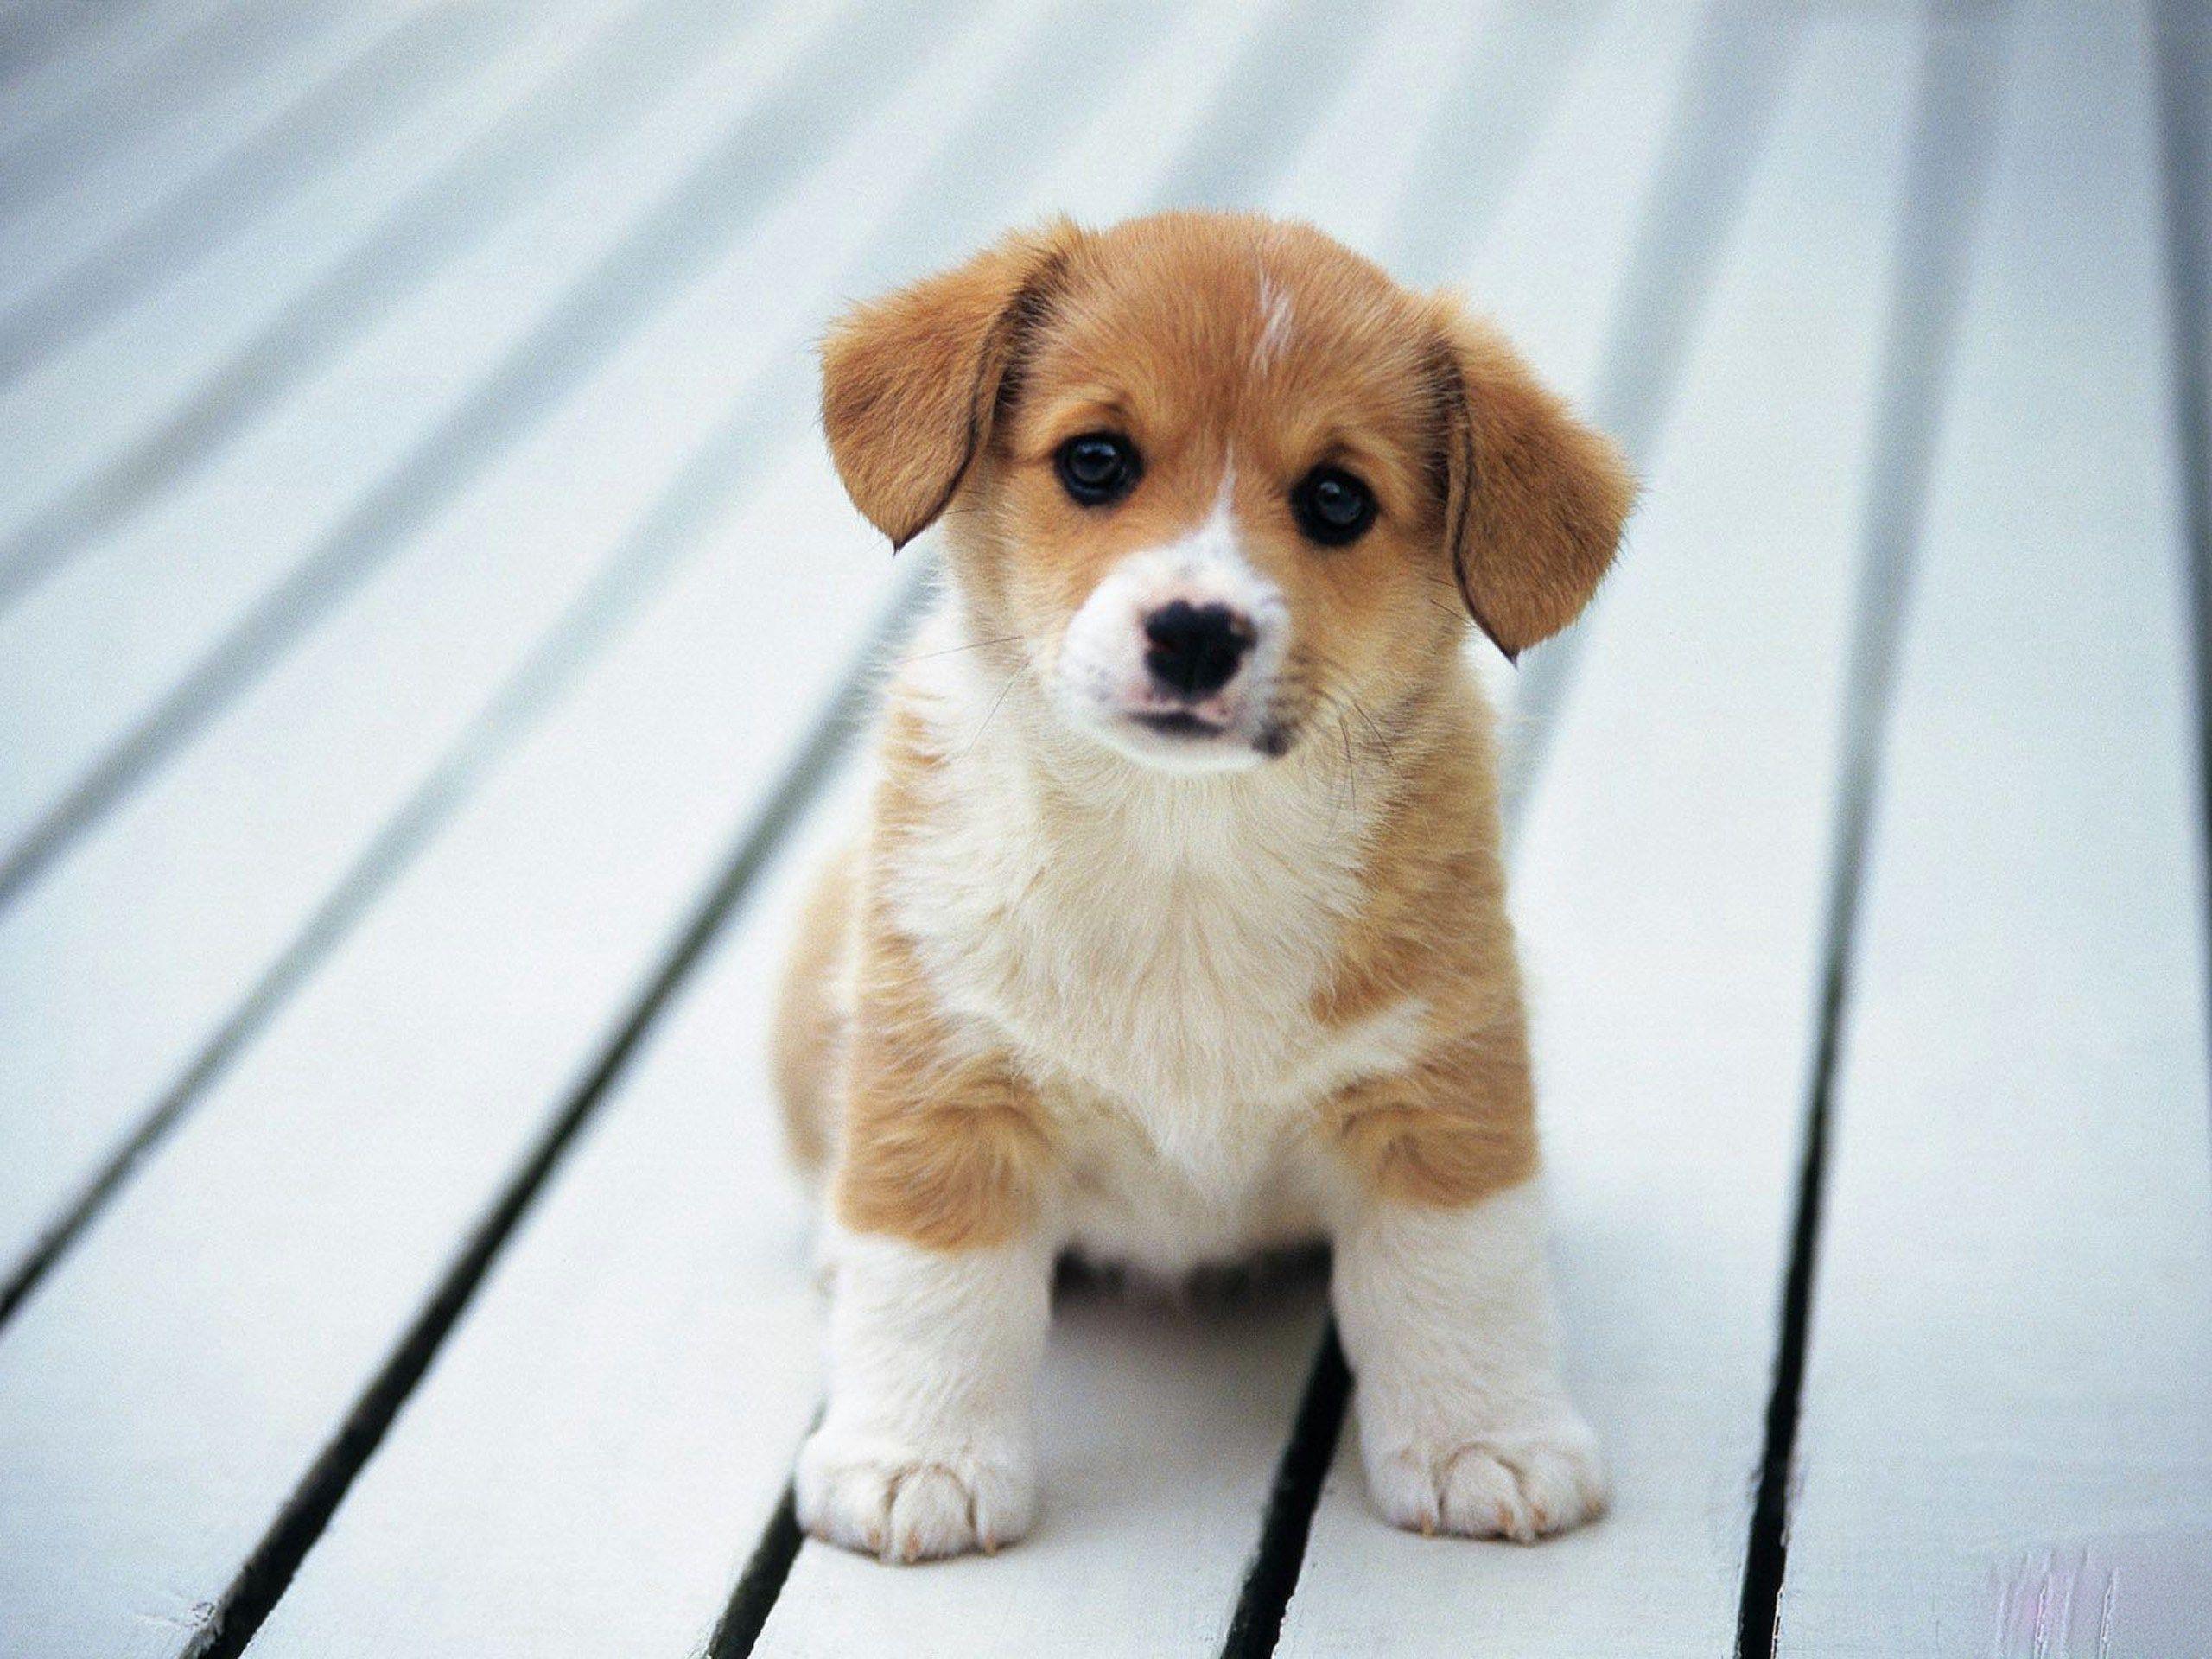 The Big Eared Beagle puppies